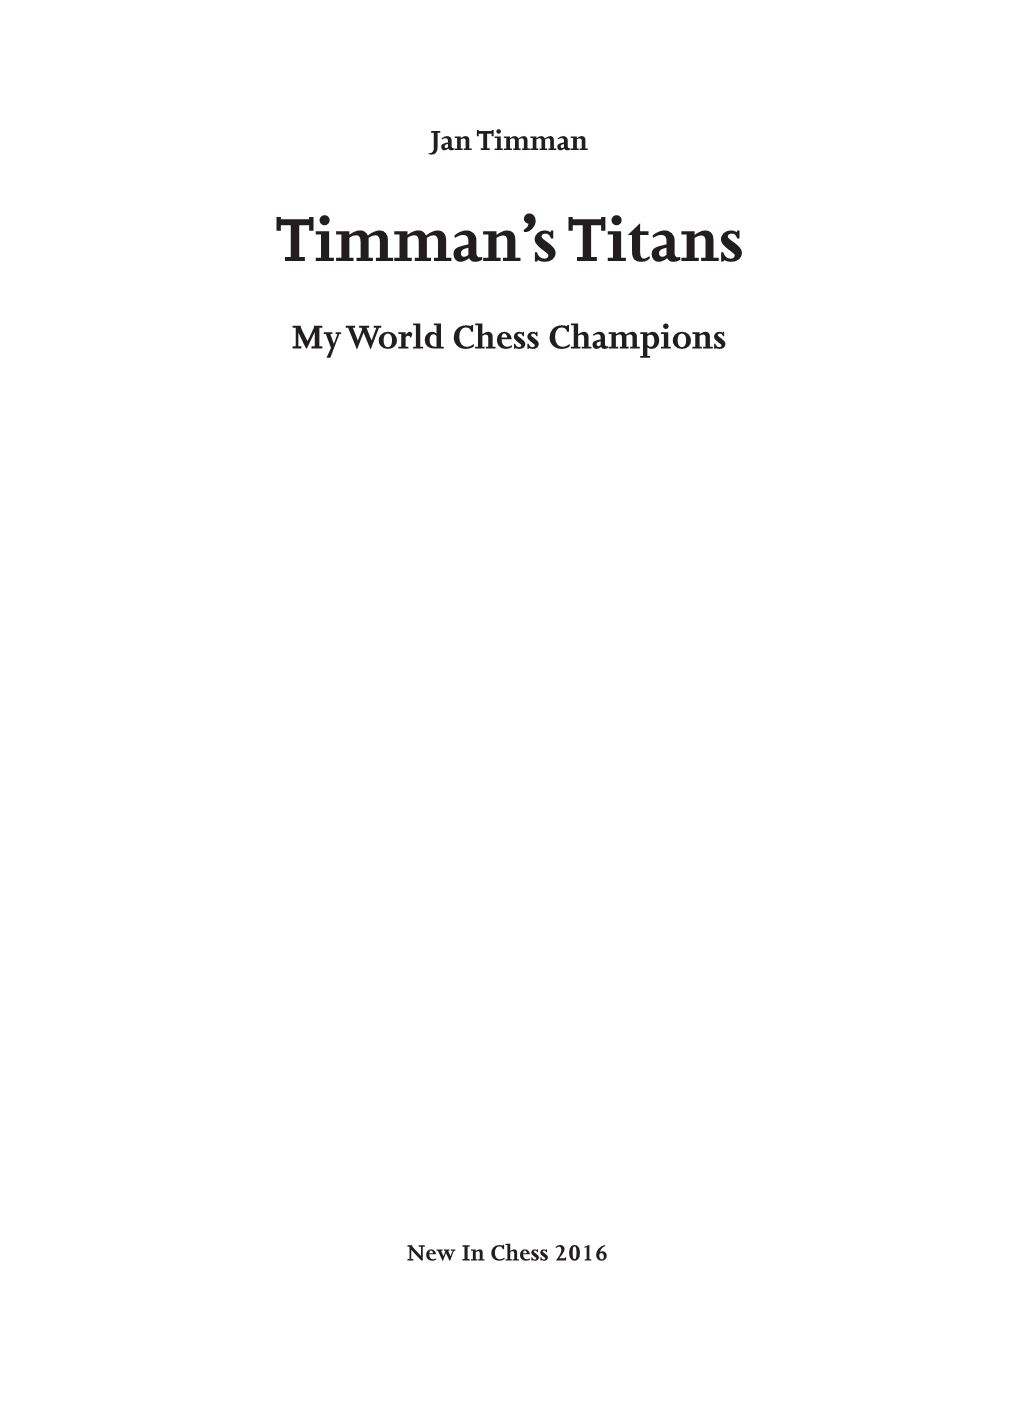 Timman's Titans